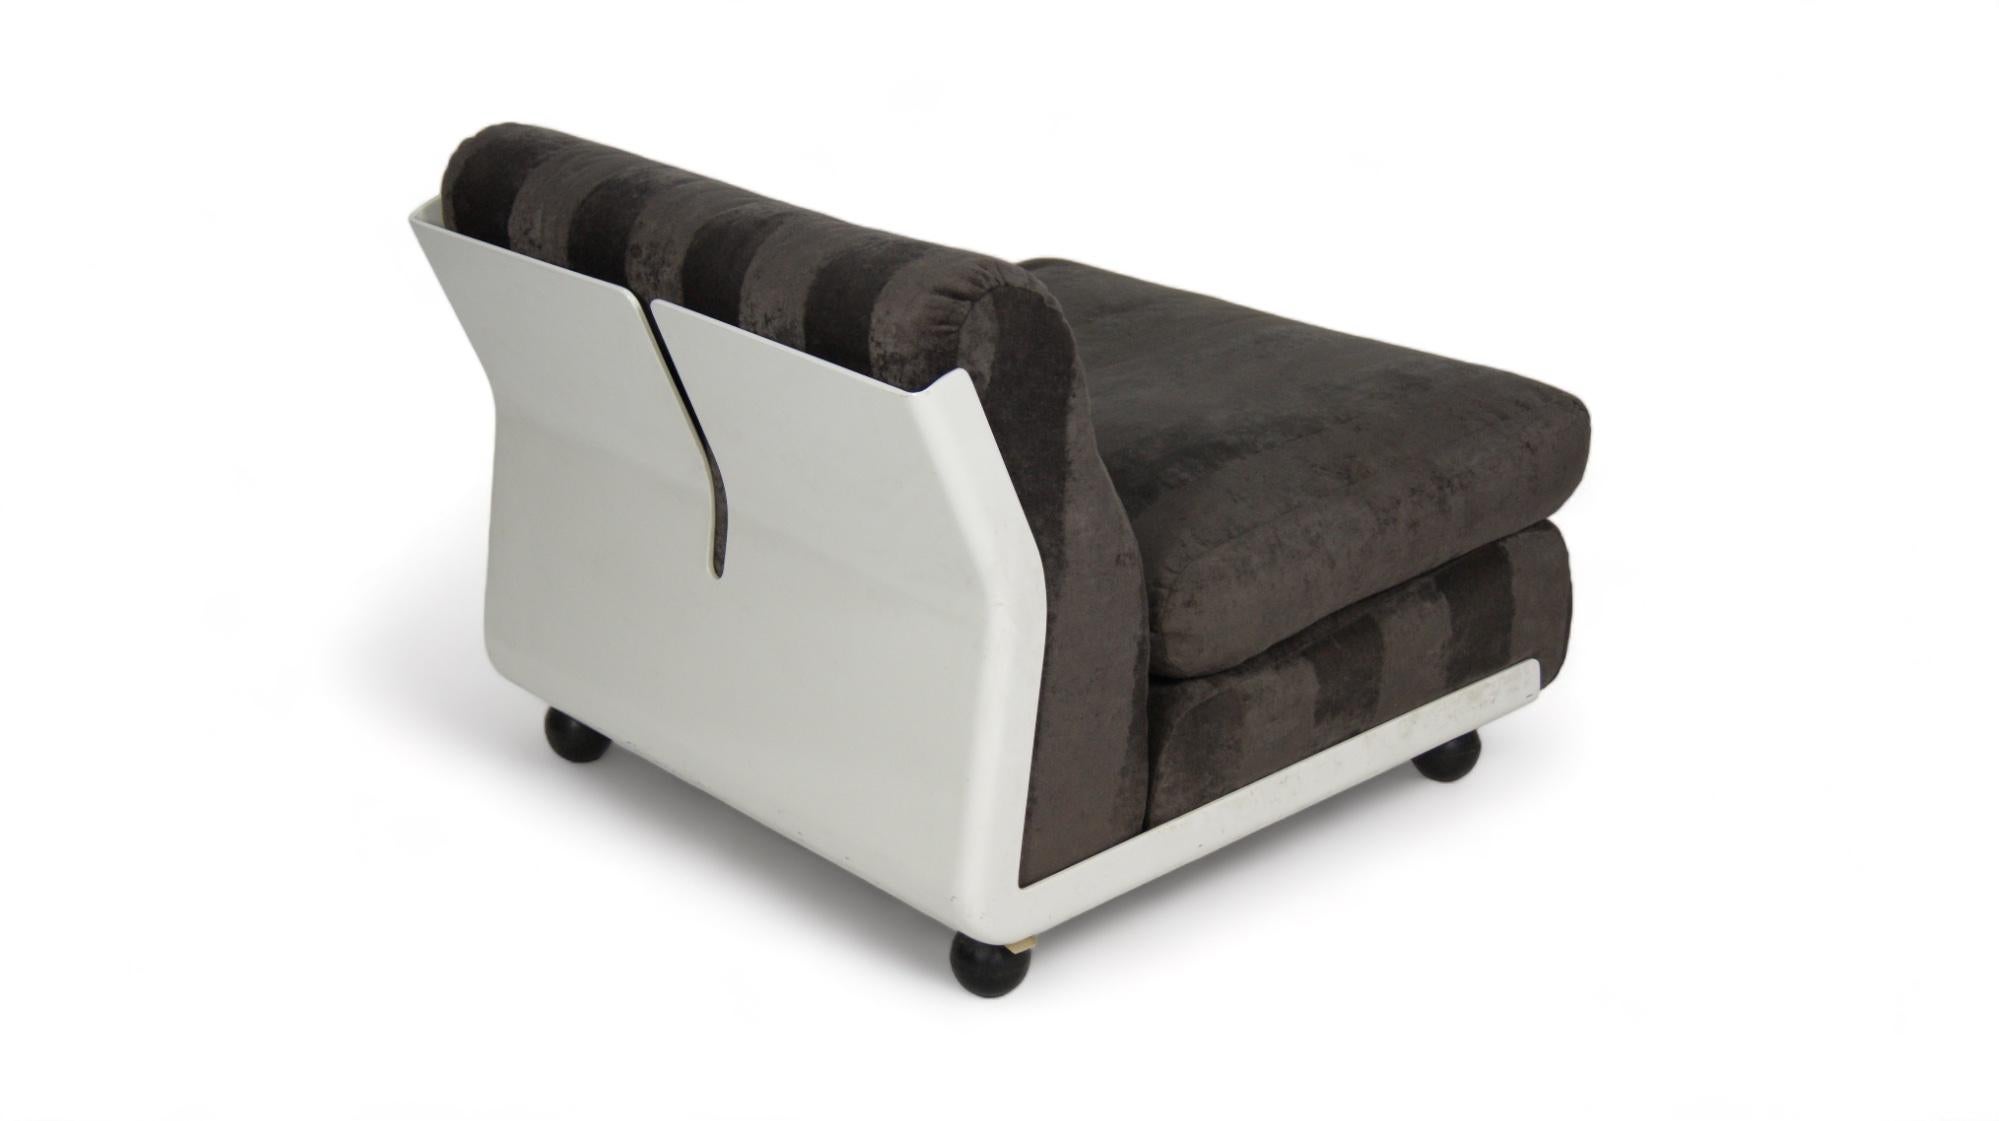 B&B Italia Mario Bellini Amanta Italian design modular sofa in dark fabric For Sale 3